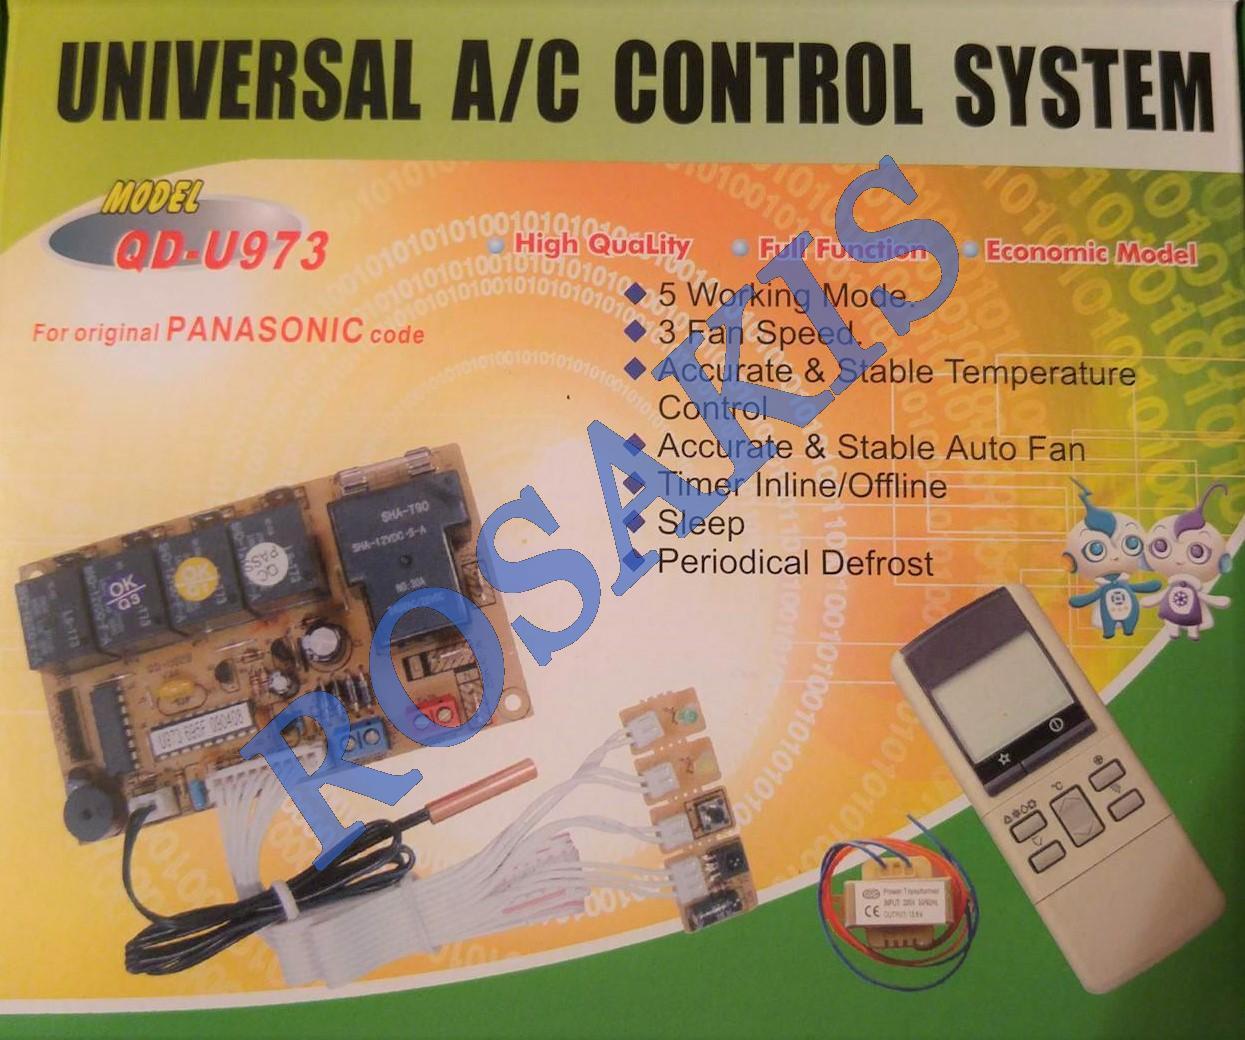 CONTROL SYSTEM UNIVERSAL ORIGINAL PANASONIC QD-U973